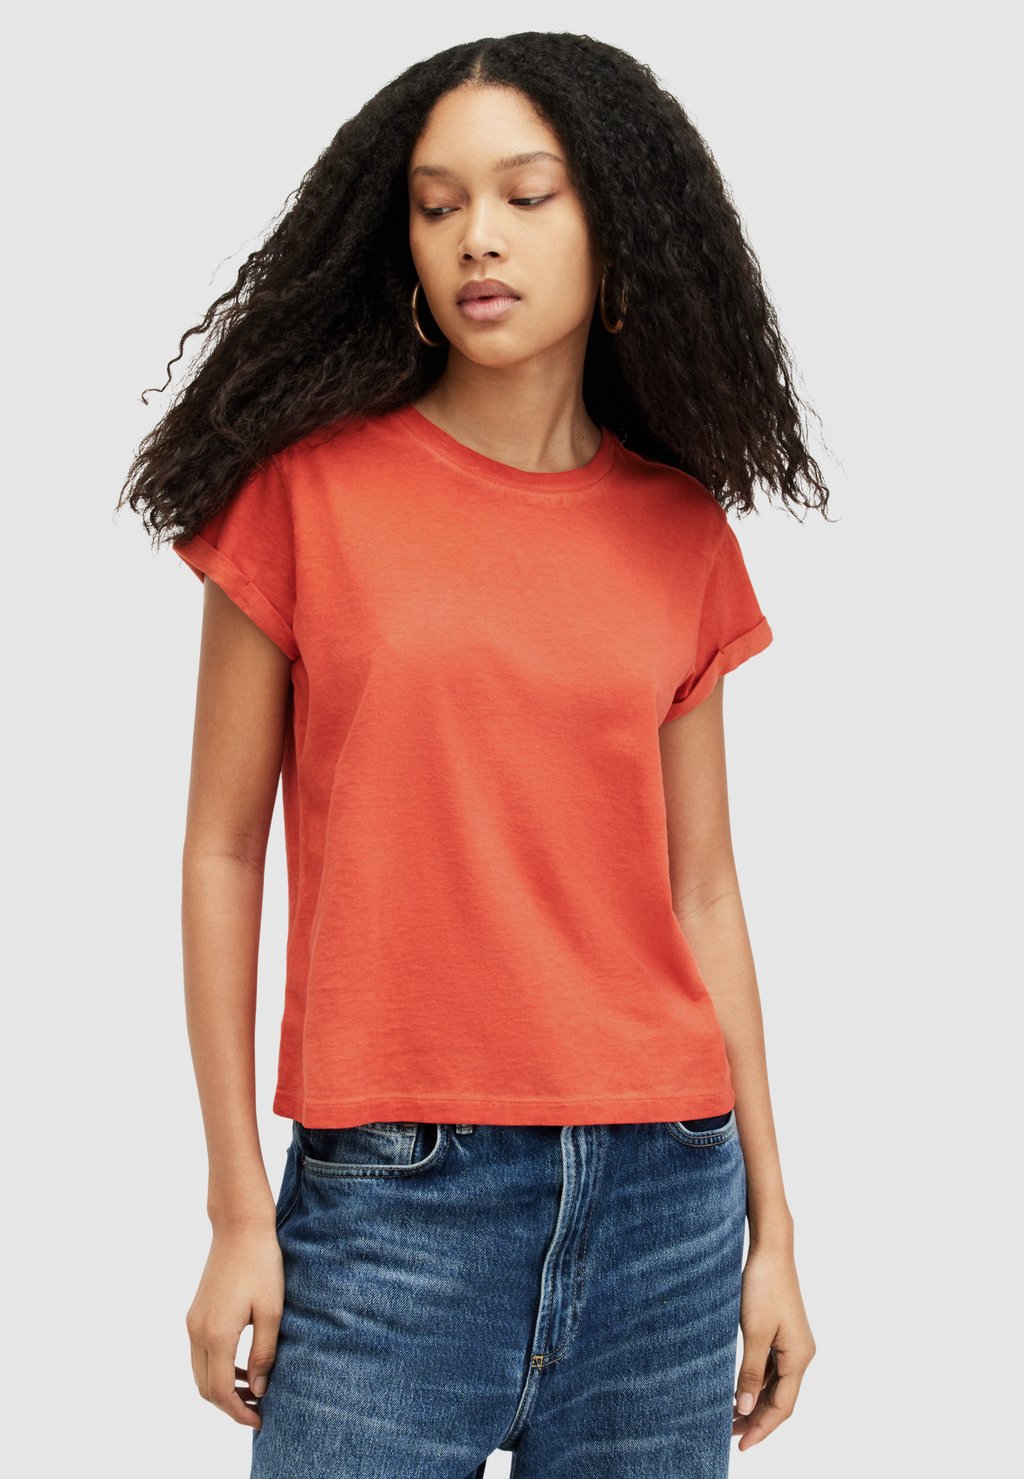 Базовая футболка ANNA AllSaints, апельсин